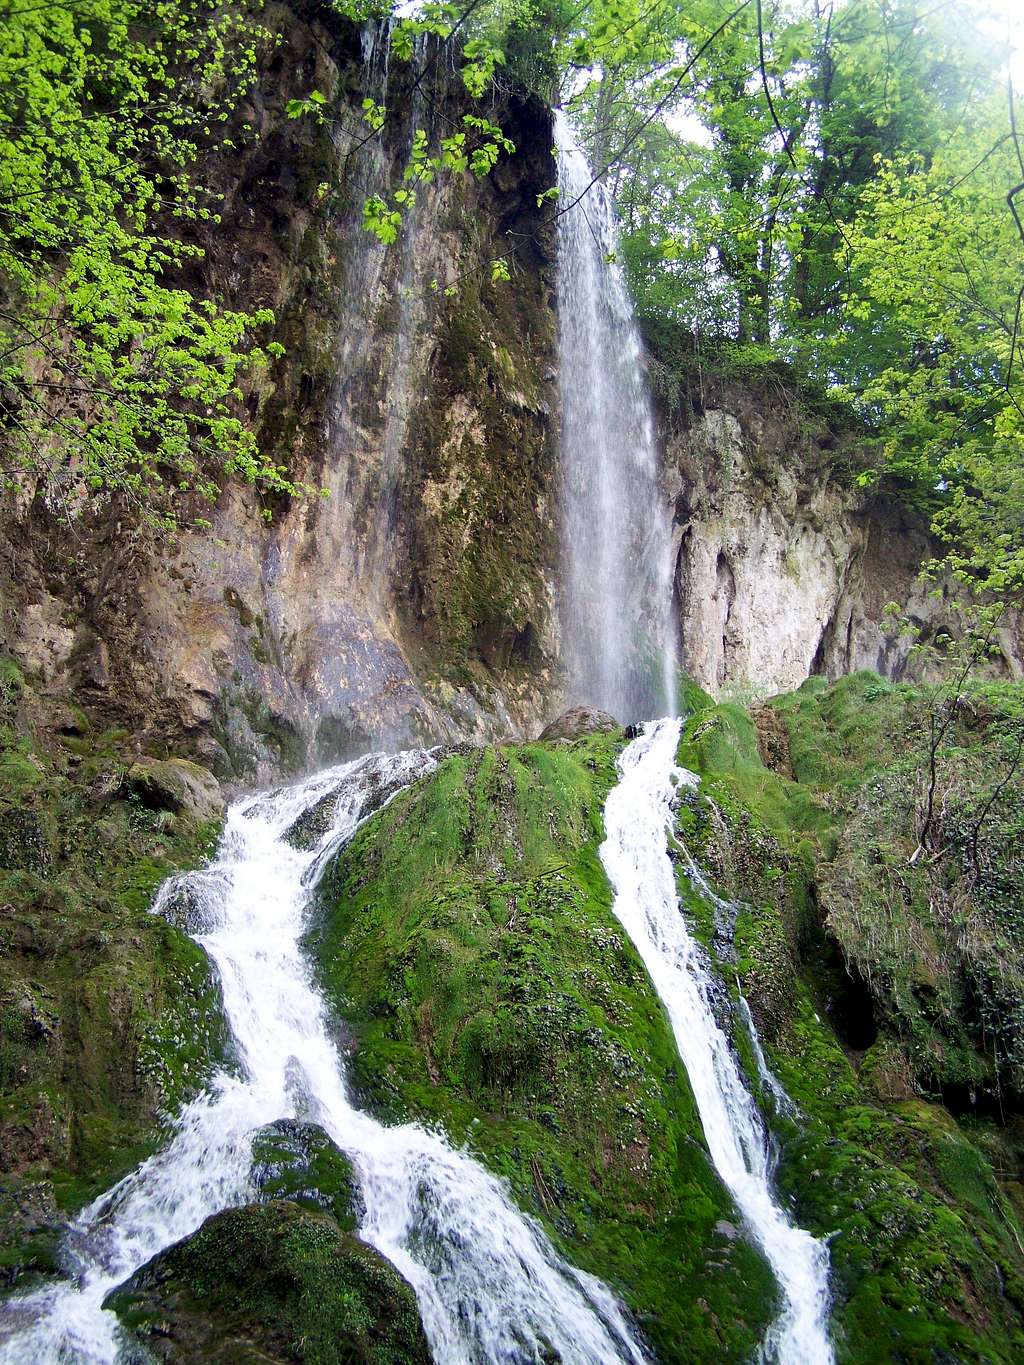 The Jankovac waterfall